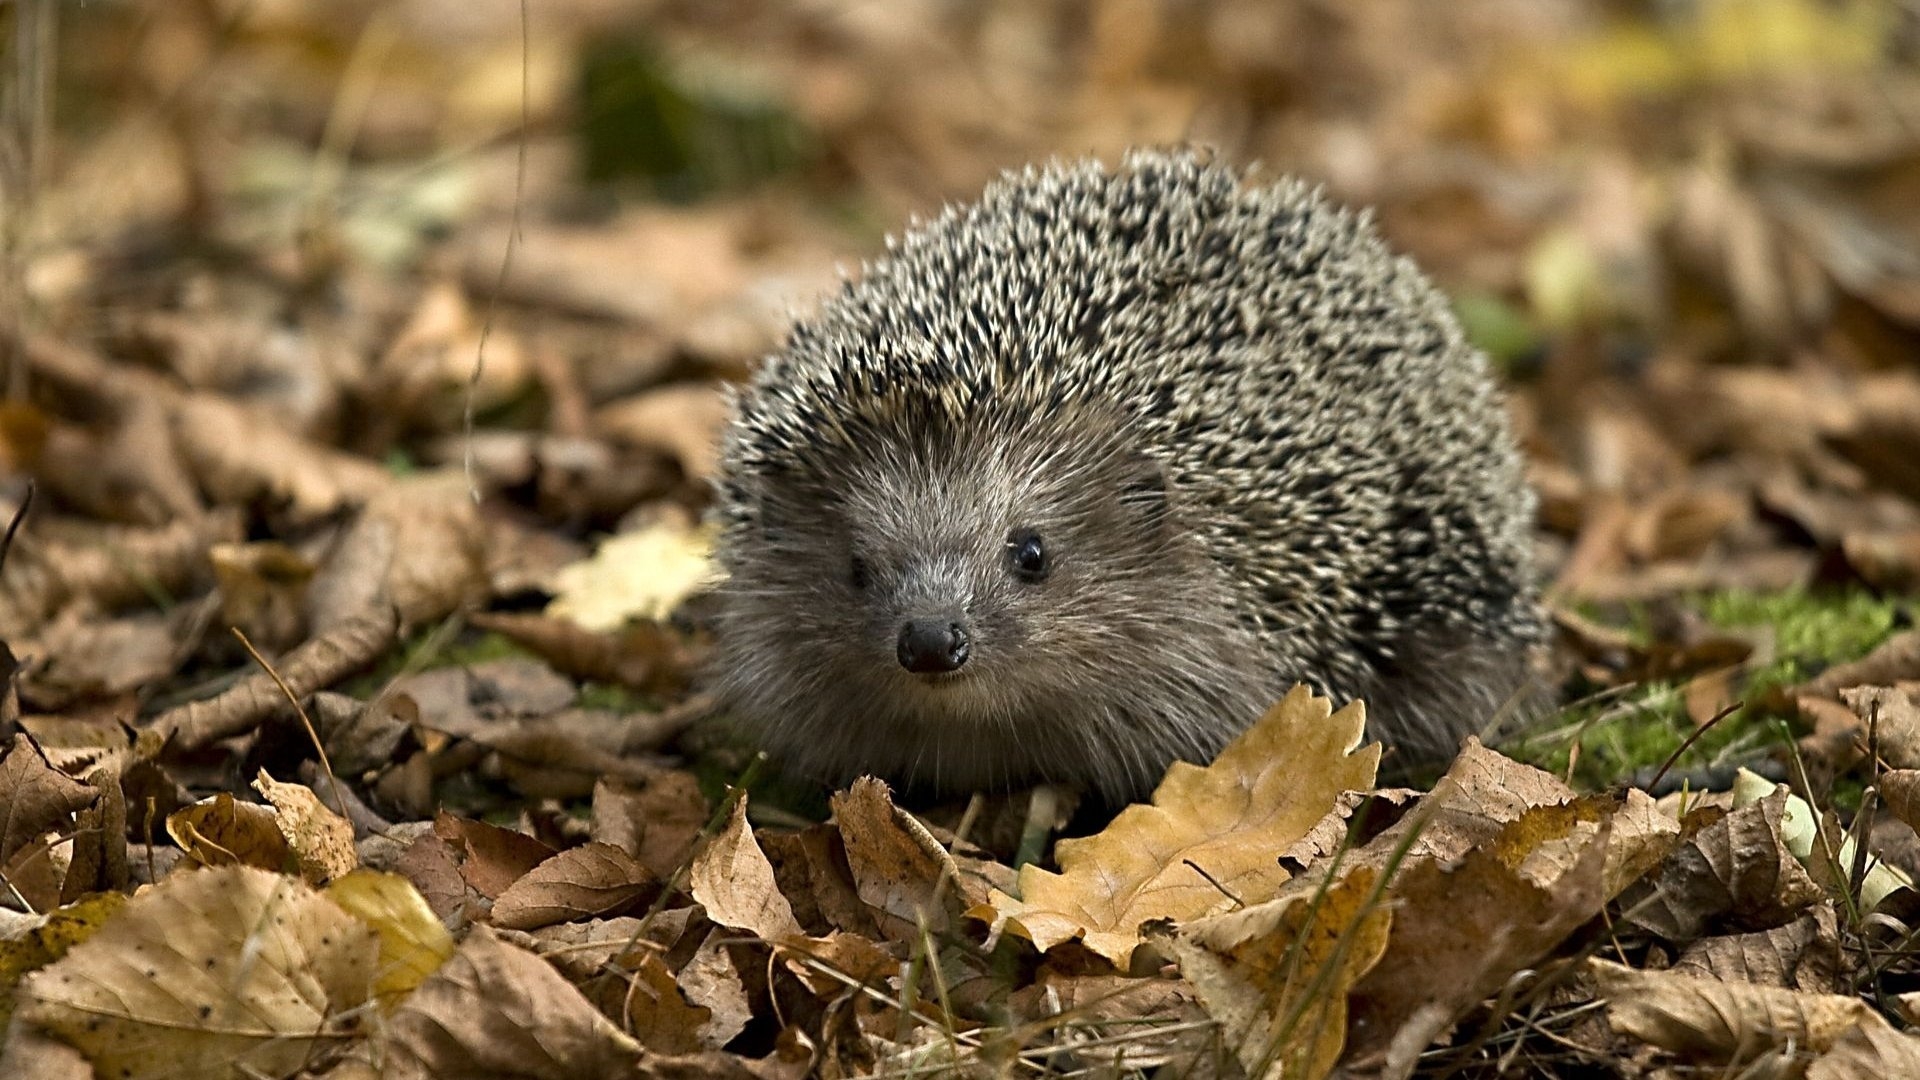 Little Hedgehog for 1920 x 1080 HDTV 1080p resolution